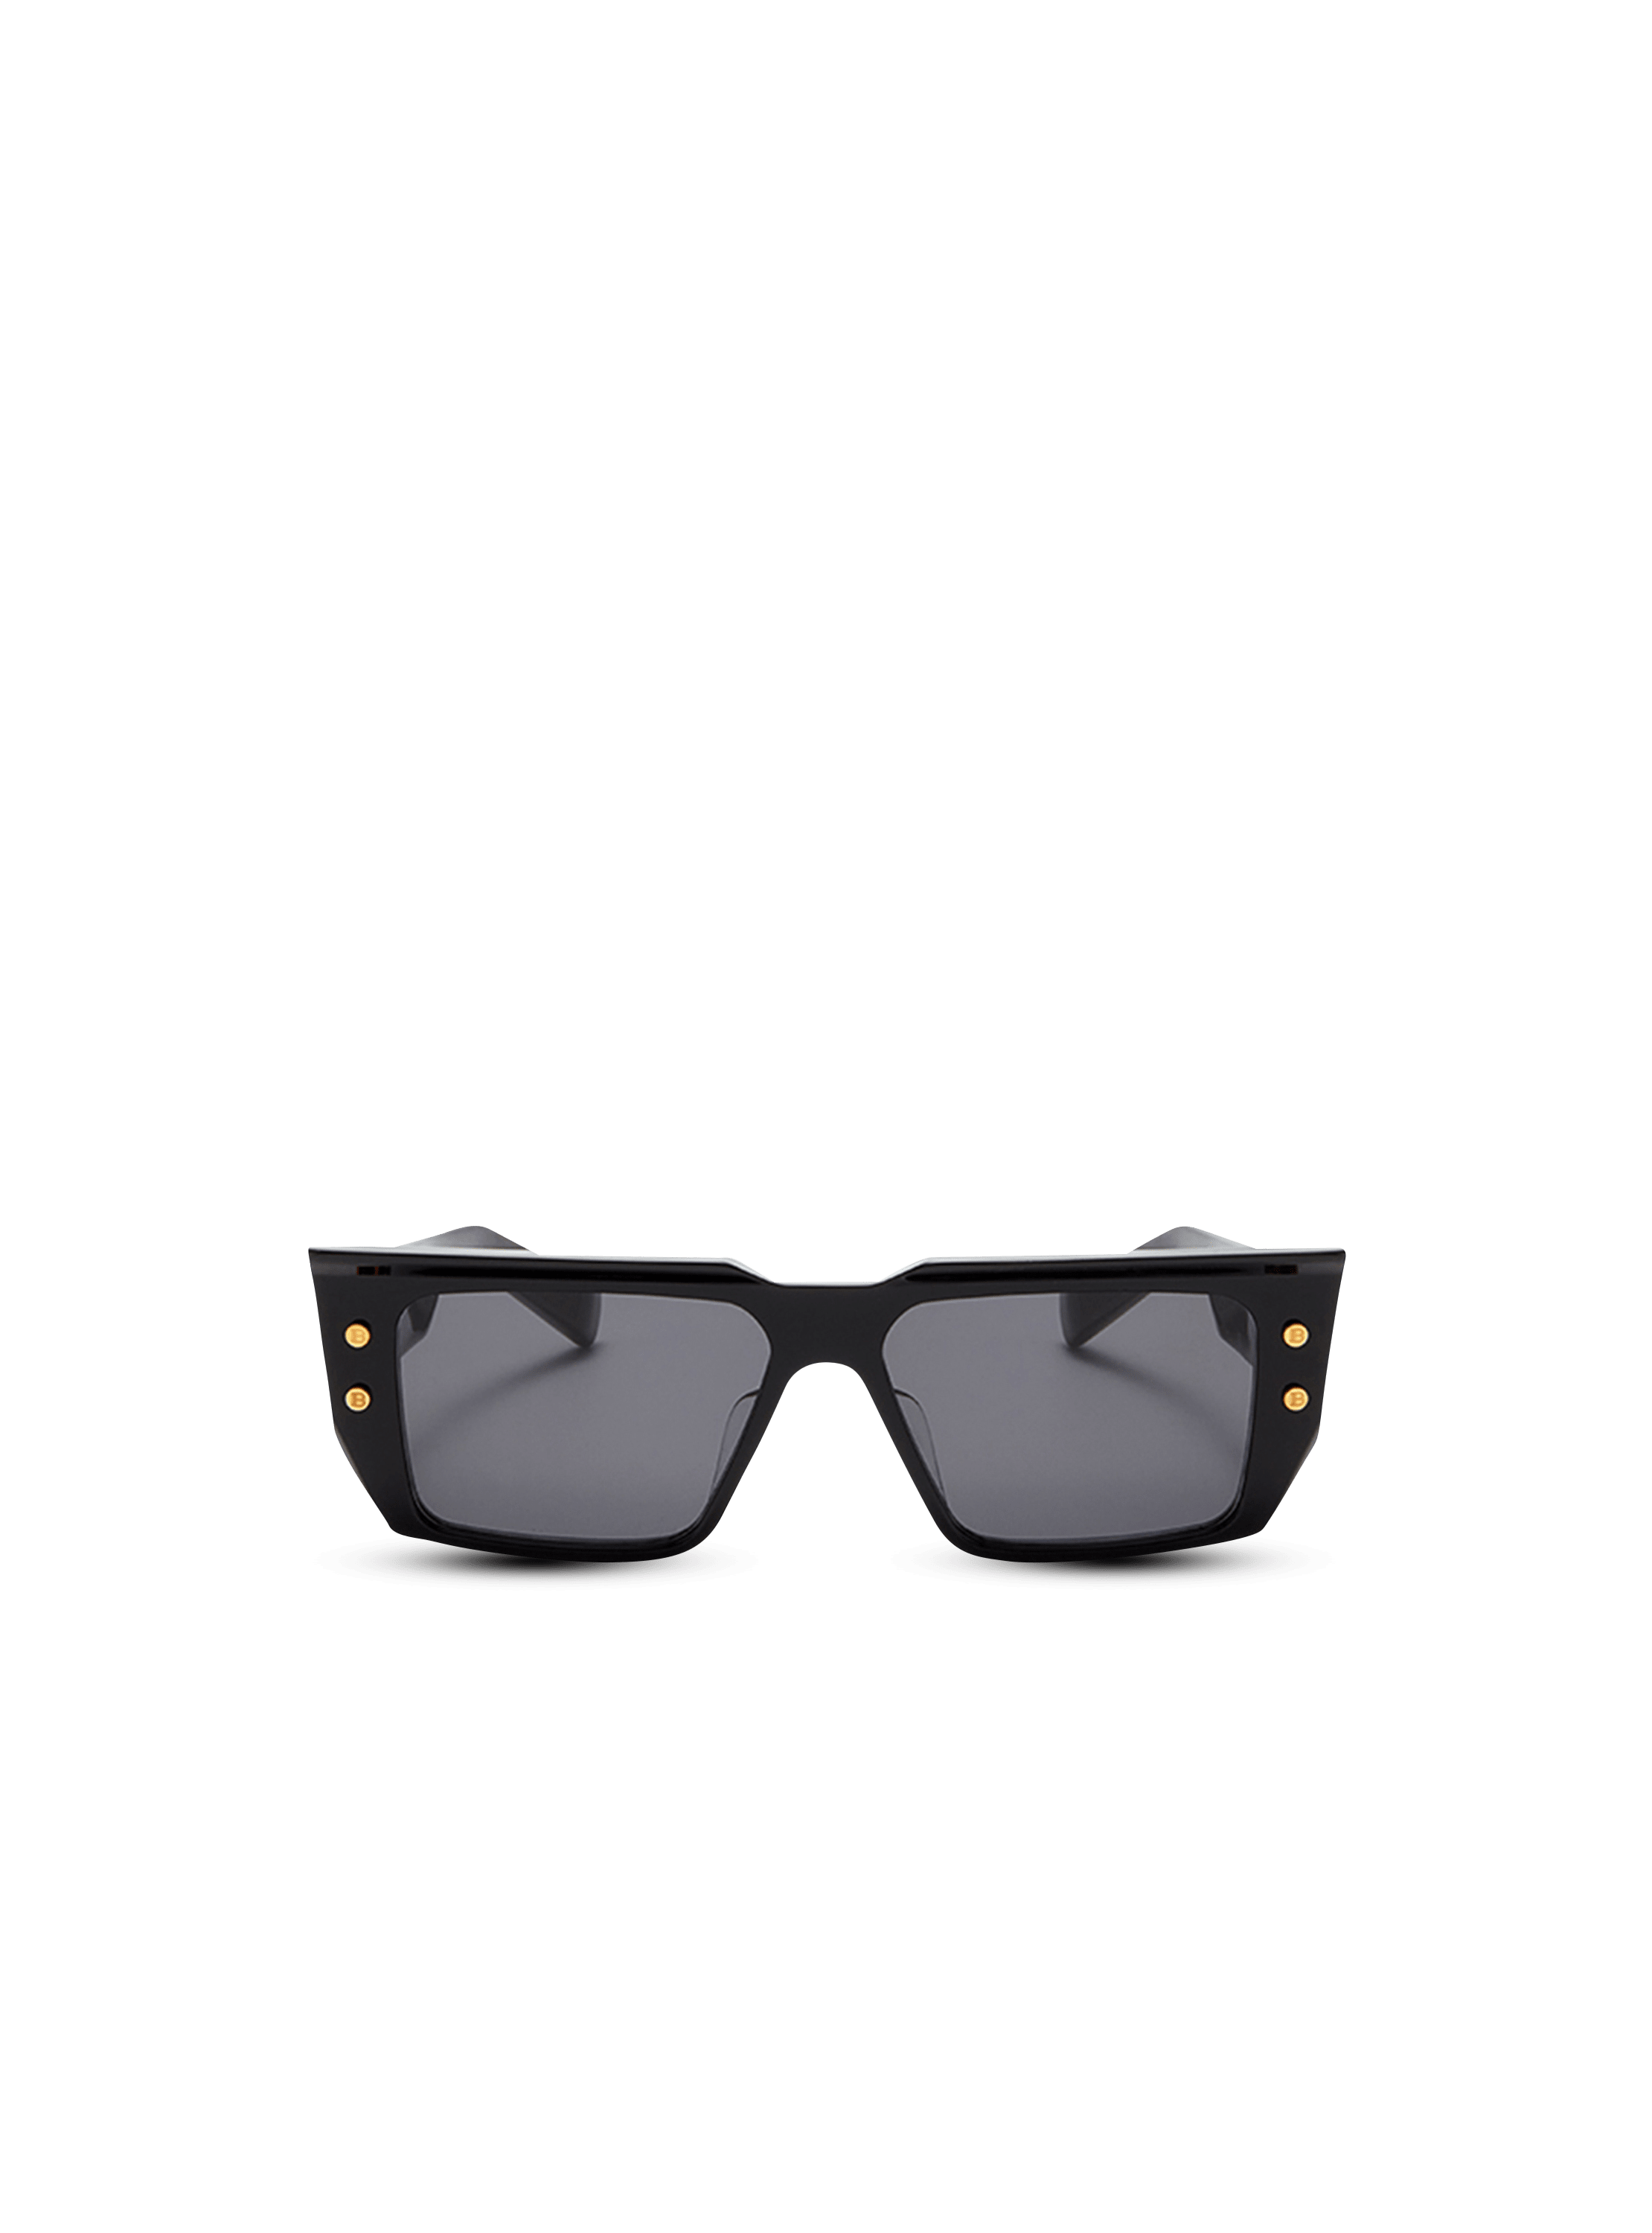 B-VI sunglasses